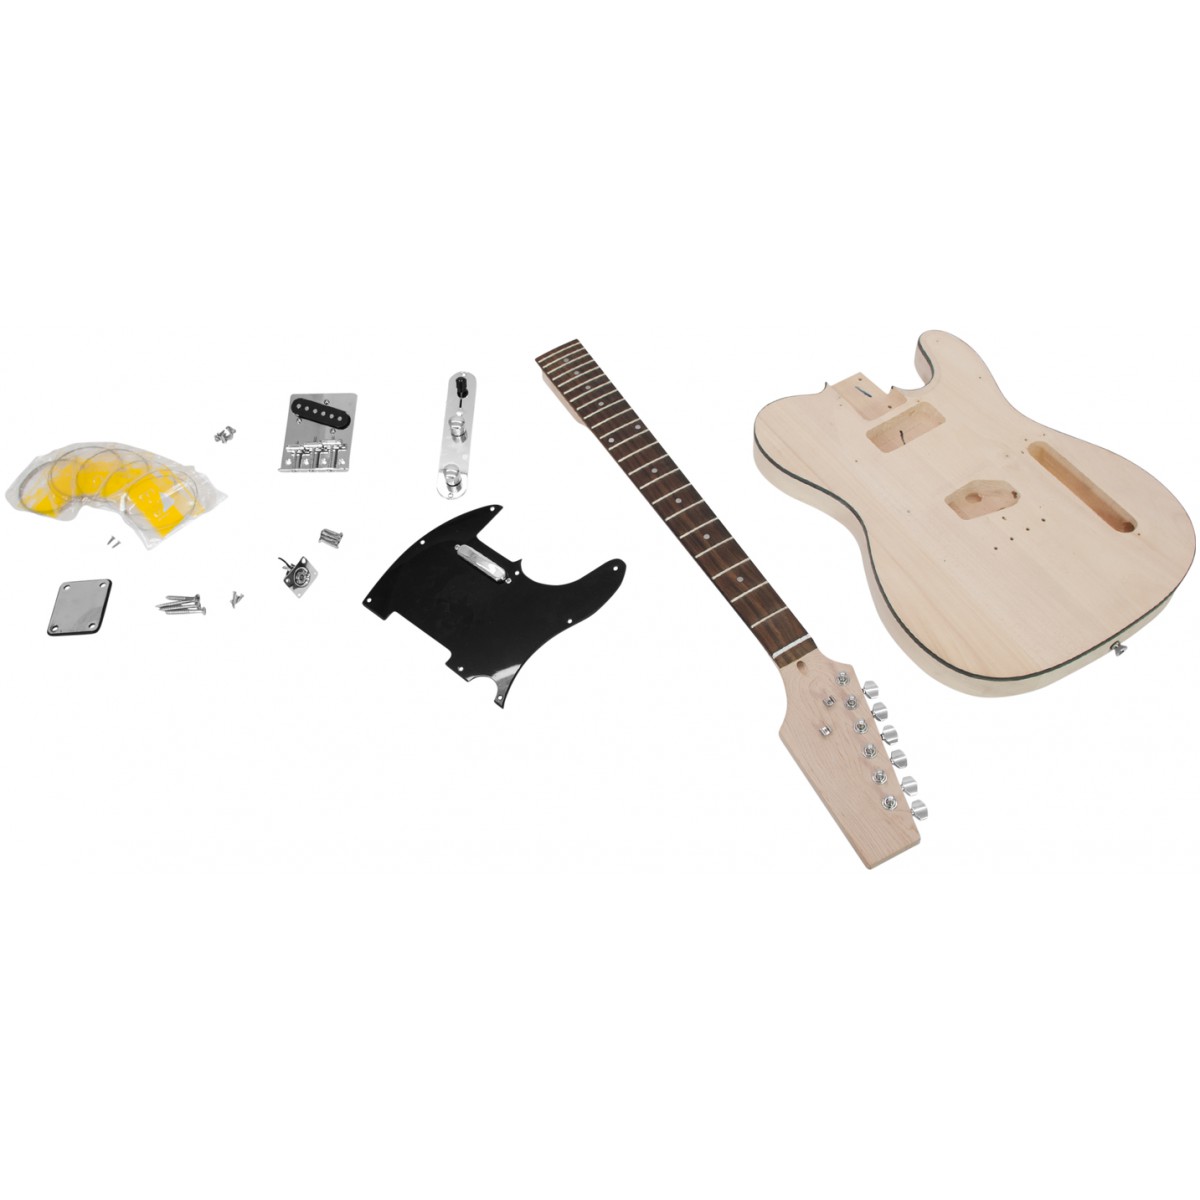 Dimavery DIY TL-10 Guitar construction kit